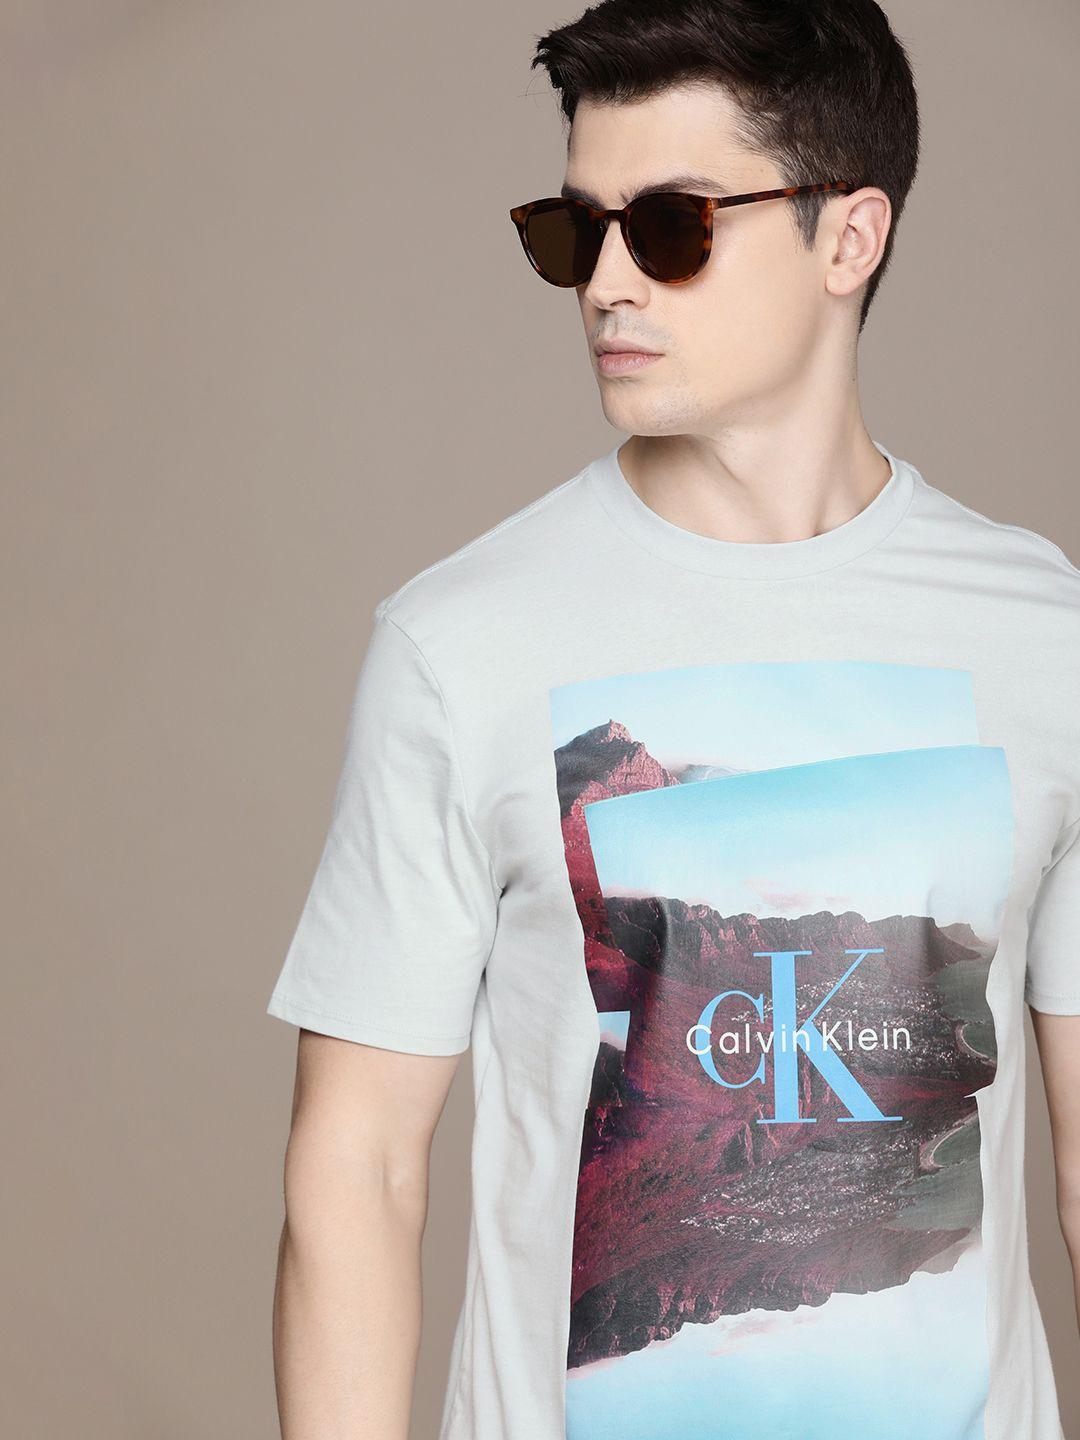 calvin klein jeans graphic & brand logo printed pure cotton t-shirt